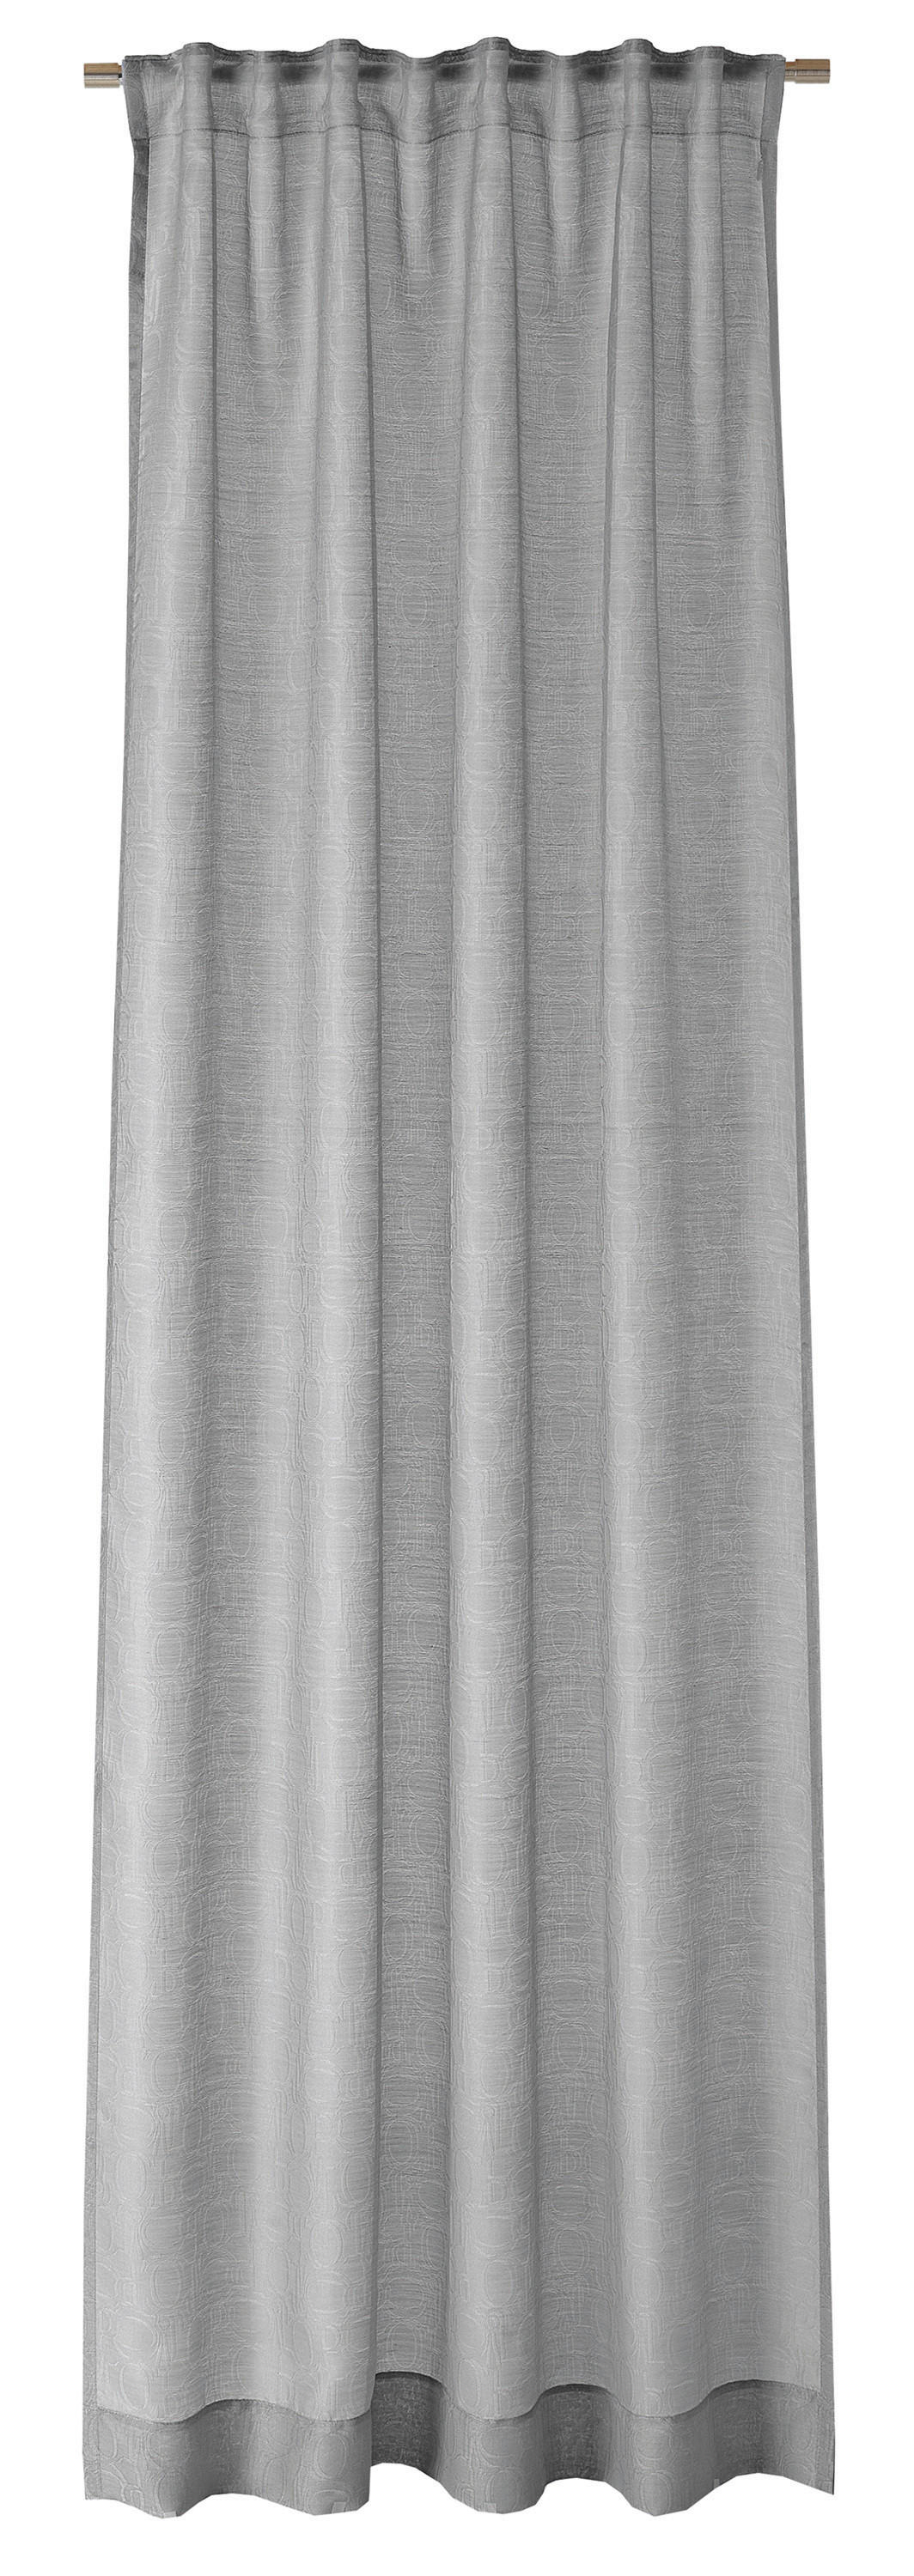 FERTIGVORHANG transparent  - Grau, Basics, Textil (130/250cm) - Joop!